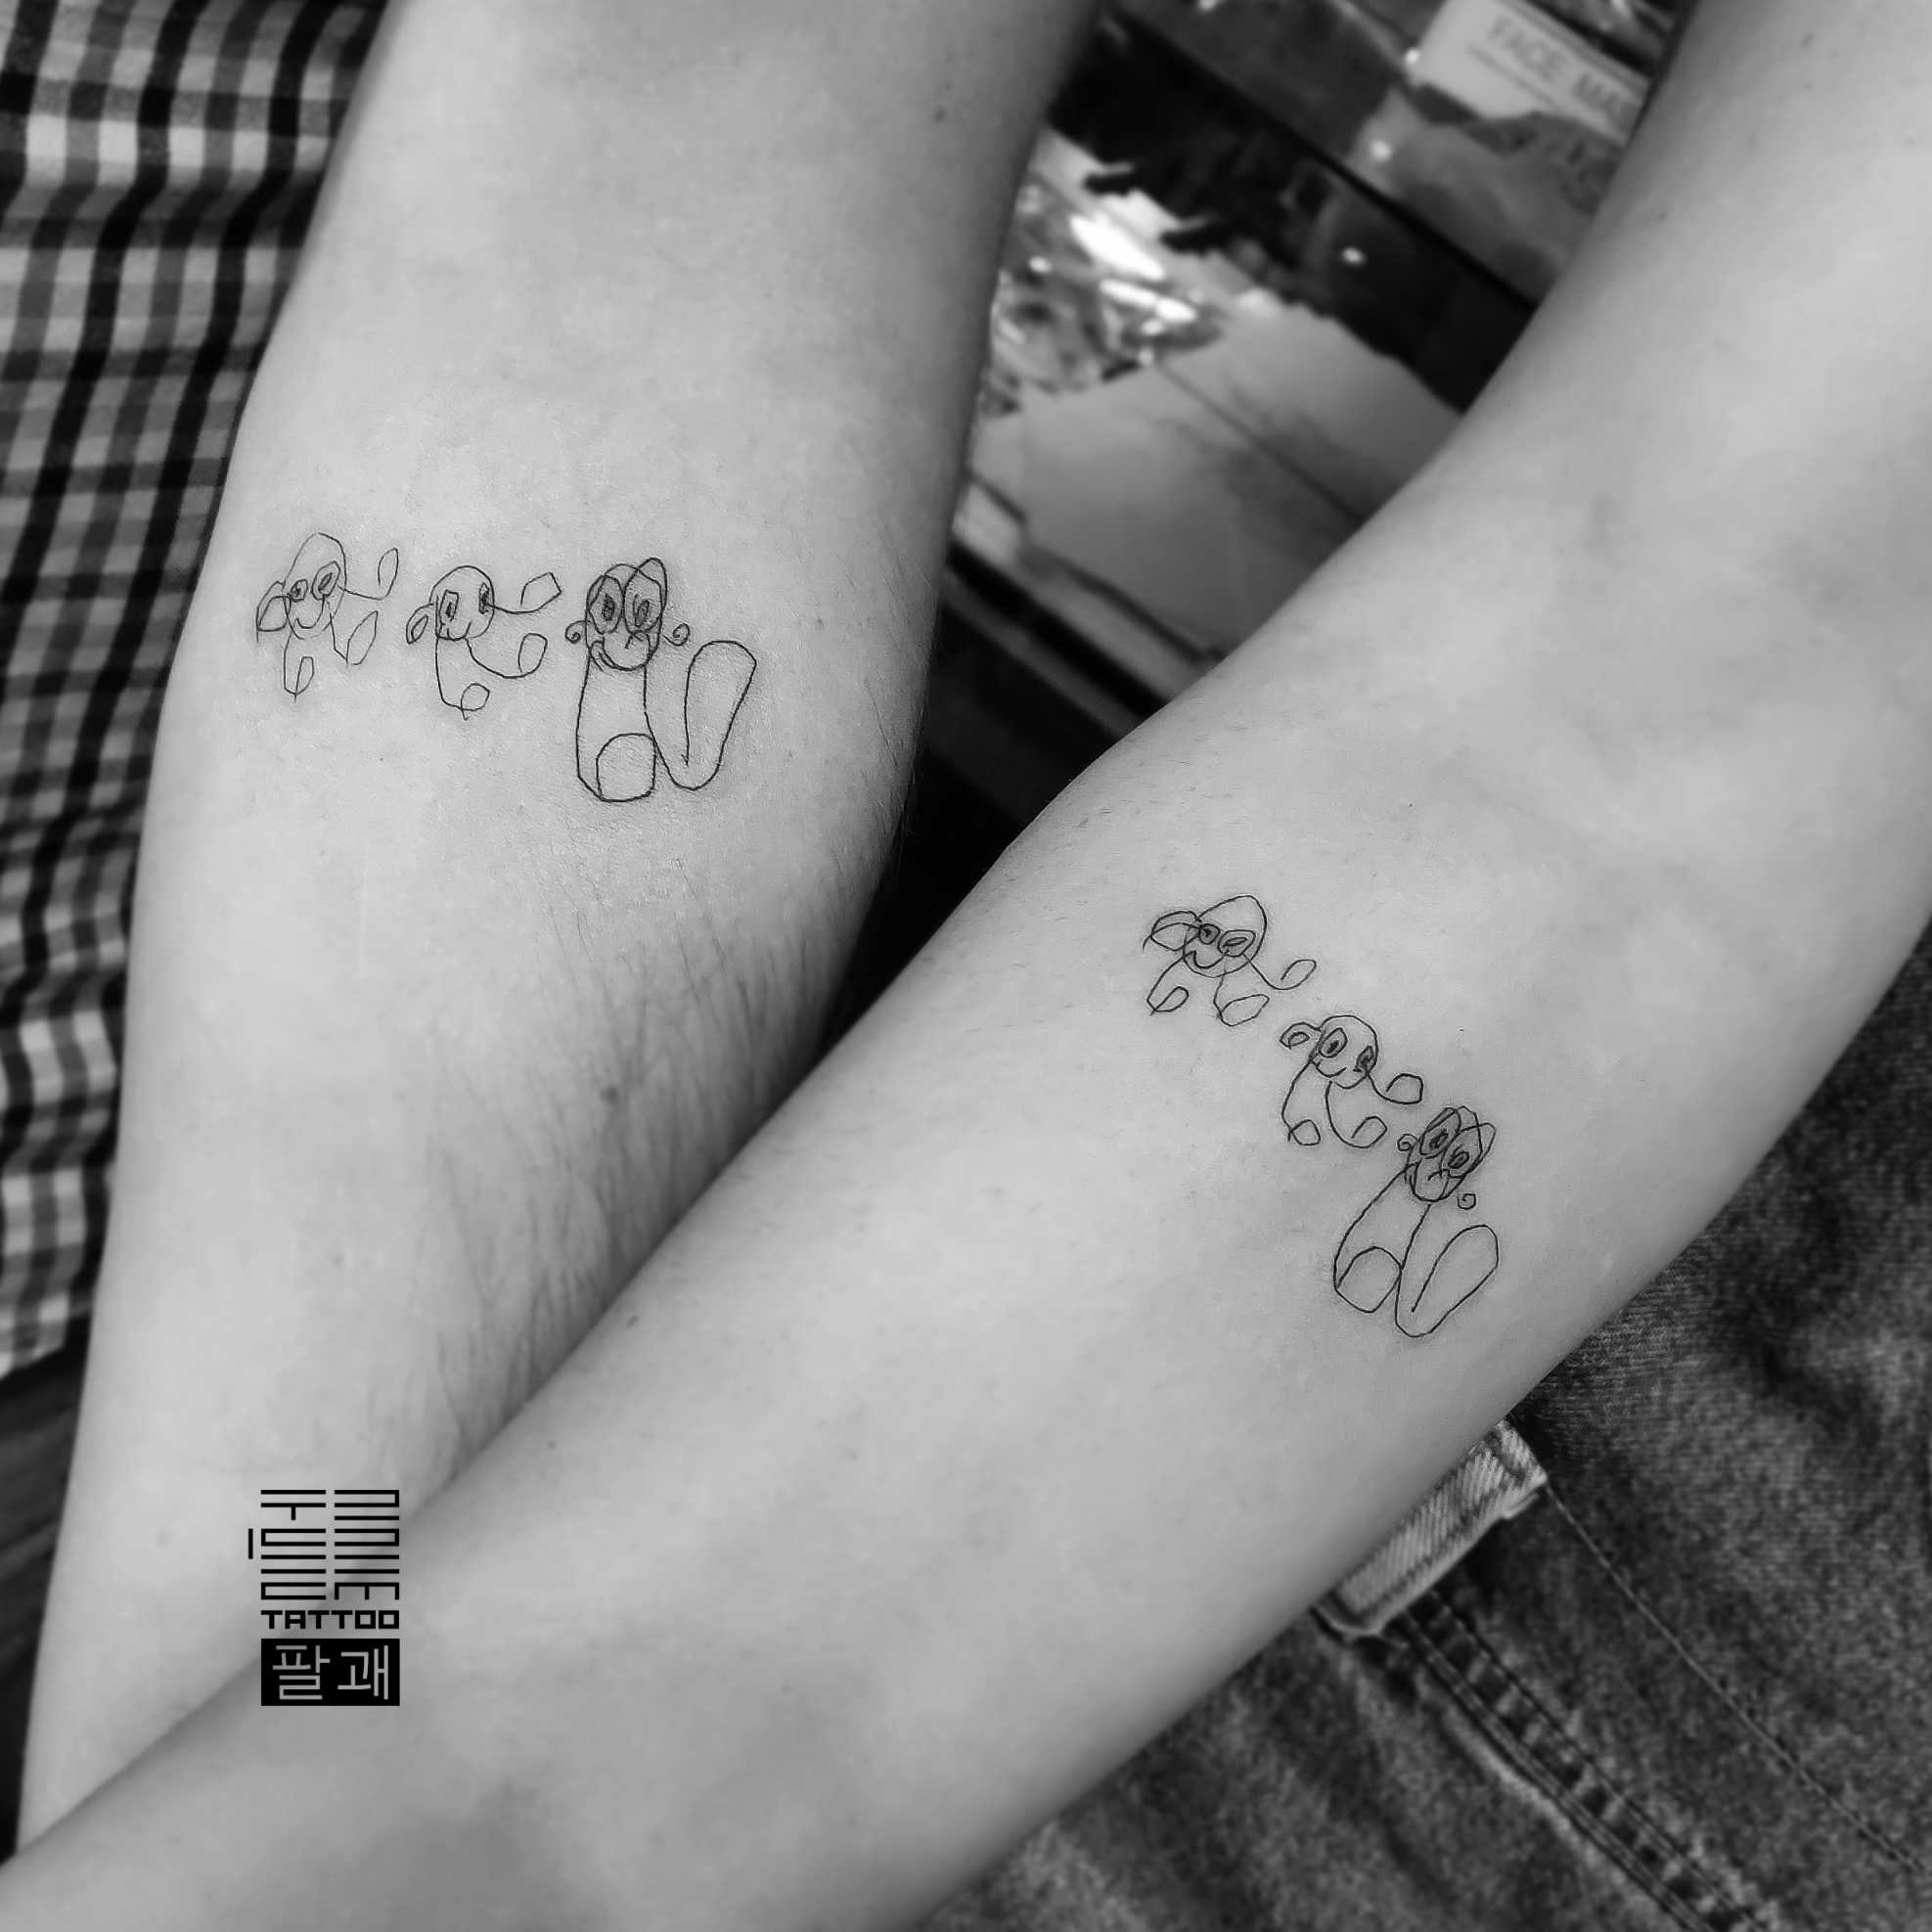 Tattoo uploaded by Oleksandr [Tattooist] • "Family" (child, mom